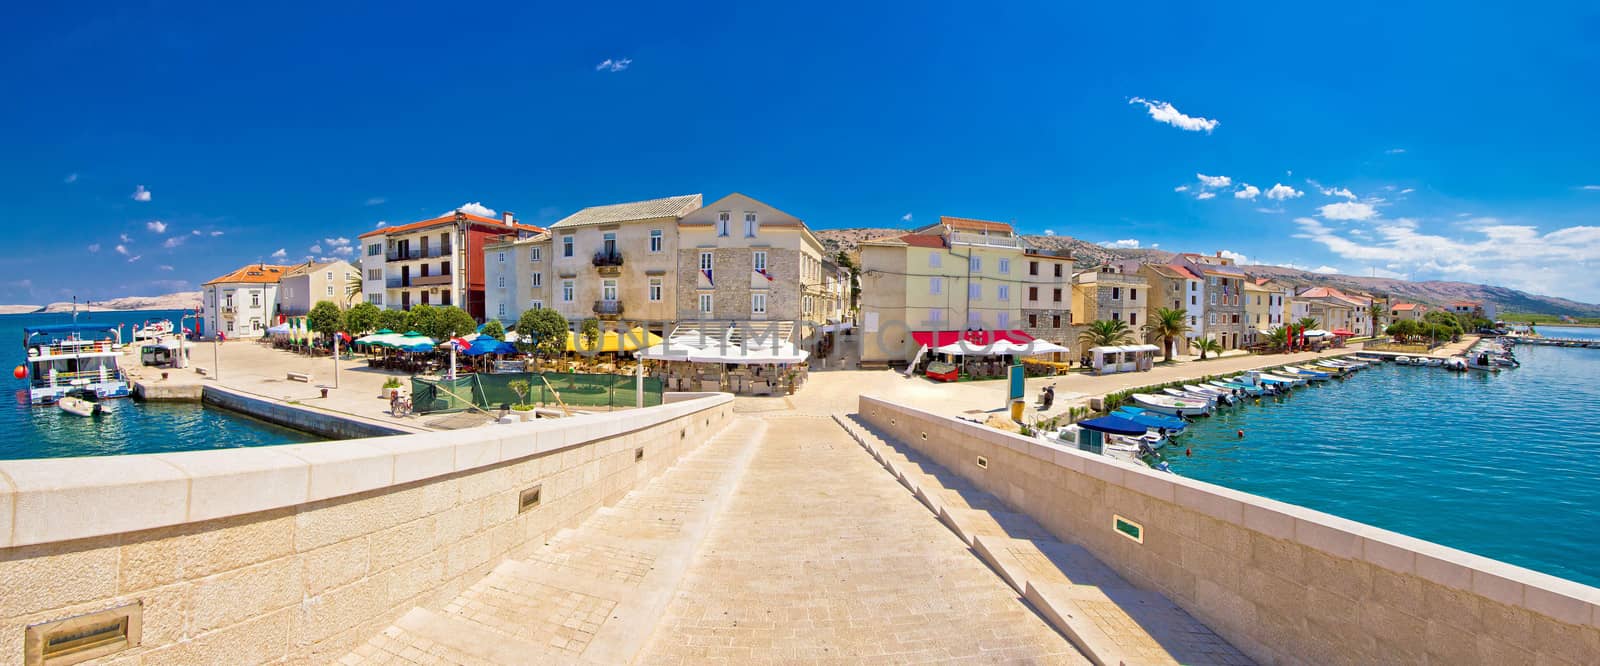 Island town of Pag panorama, view from bridge, Dalmatia, Croatia